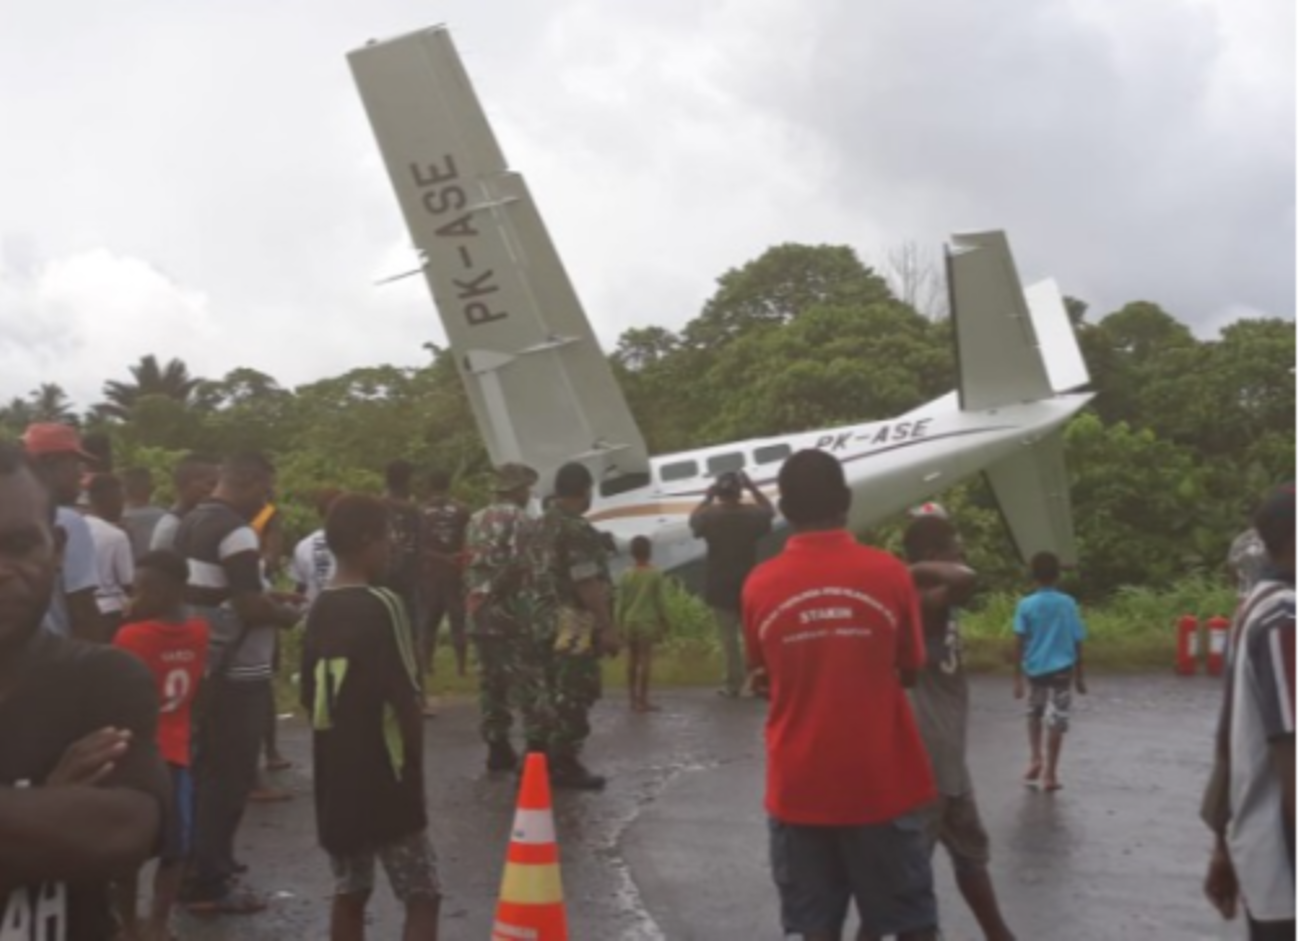 Badan pesawat Alfra Trans yang tergelincir saat mendarat di Bandara Kasonaweja, Mamberamo Tengah, Papua. Pesawat nyaris masuk jurang. (Foto: beritatrans.com)